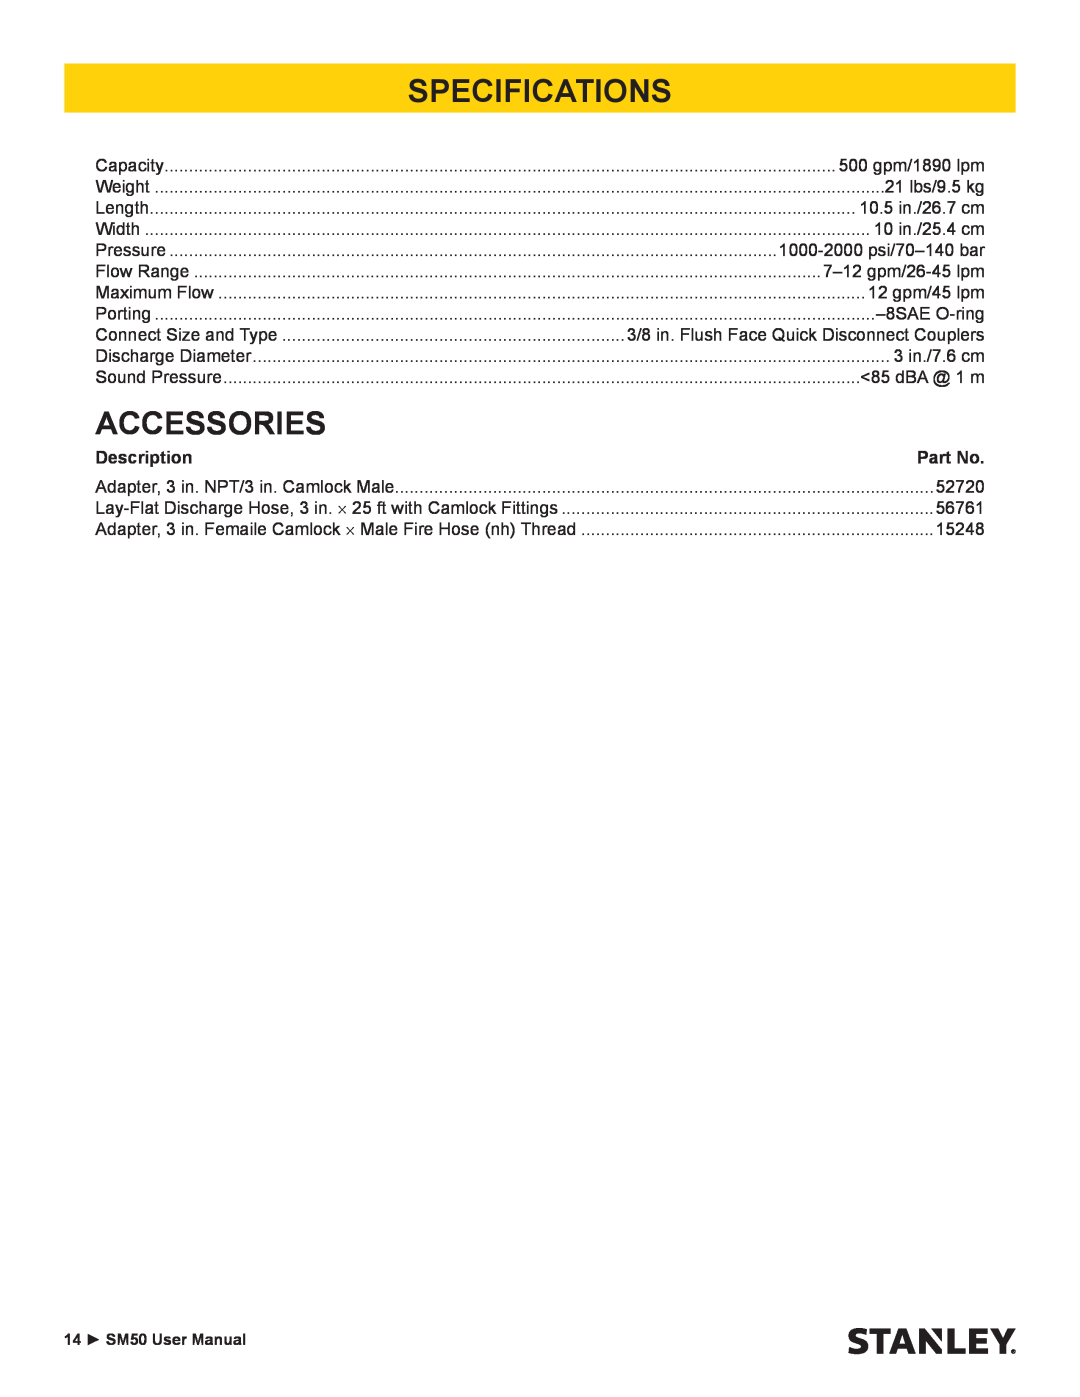 Stanley Black & Decker SM50 user manual Specifications, Accessories, Description 